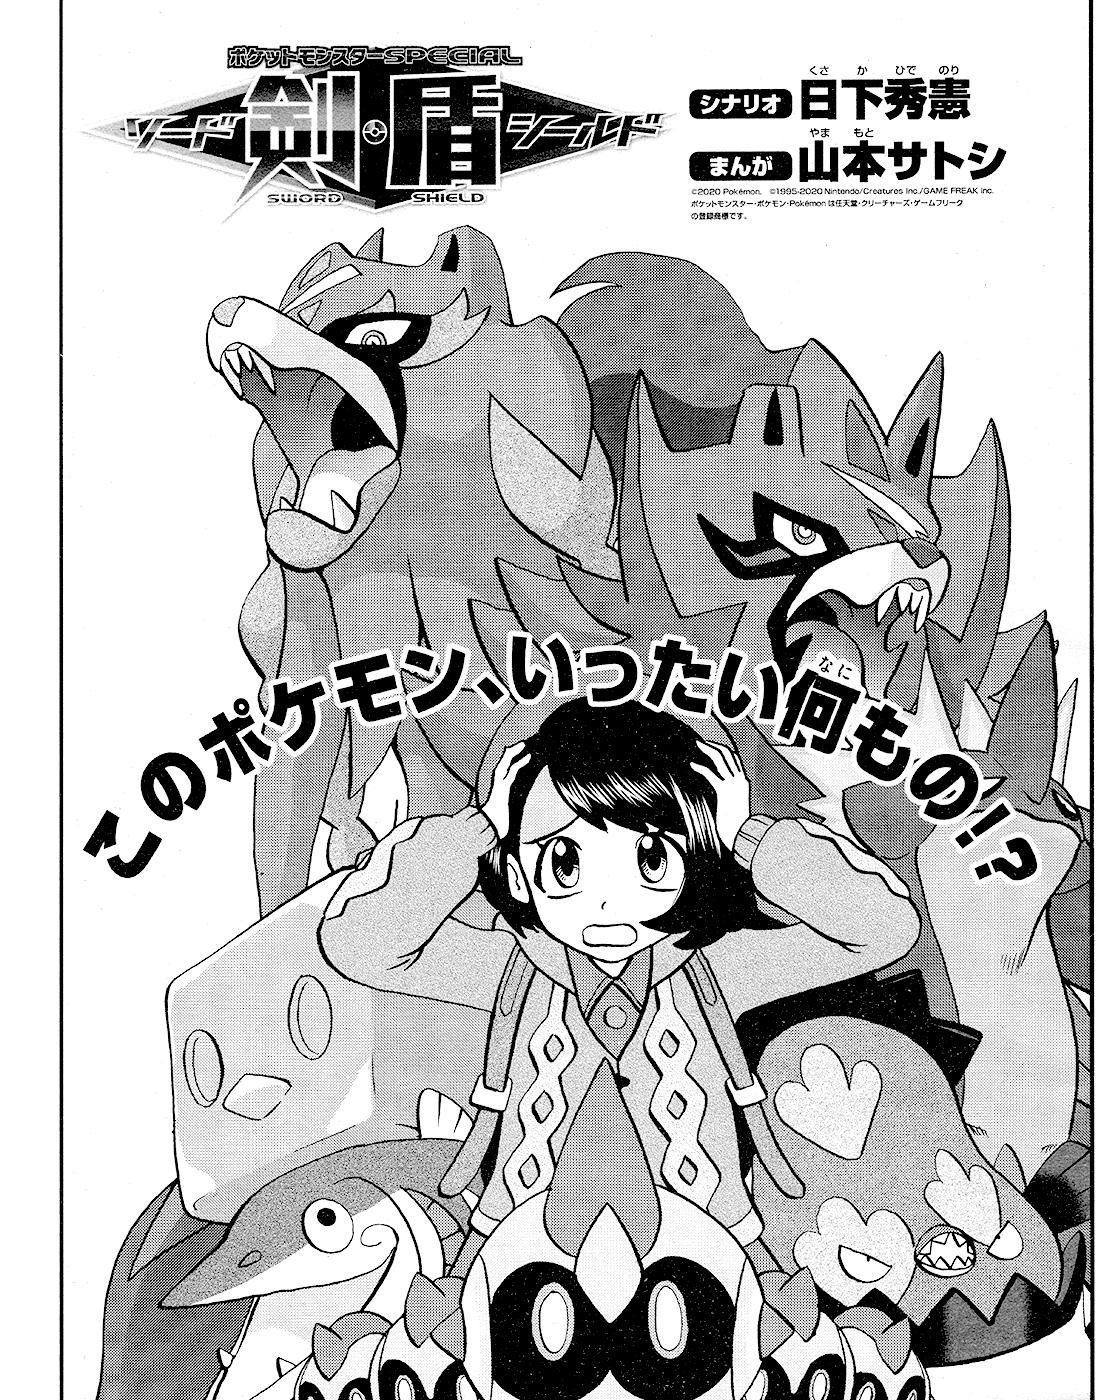 Read Pokémon Special Sword And Shield Manga on Mangakakalot